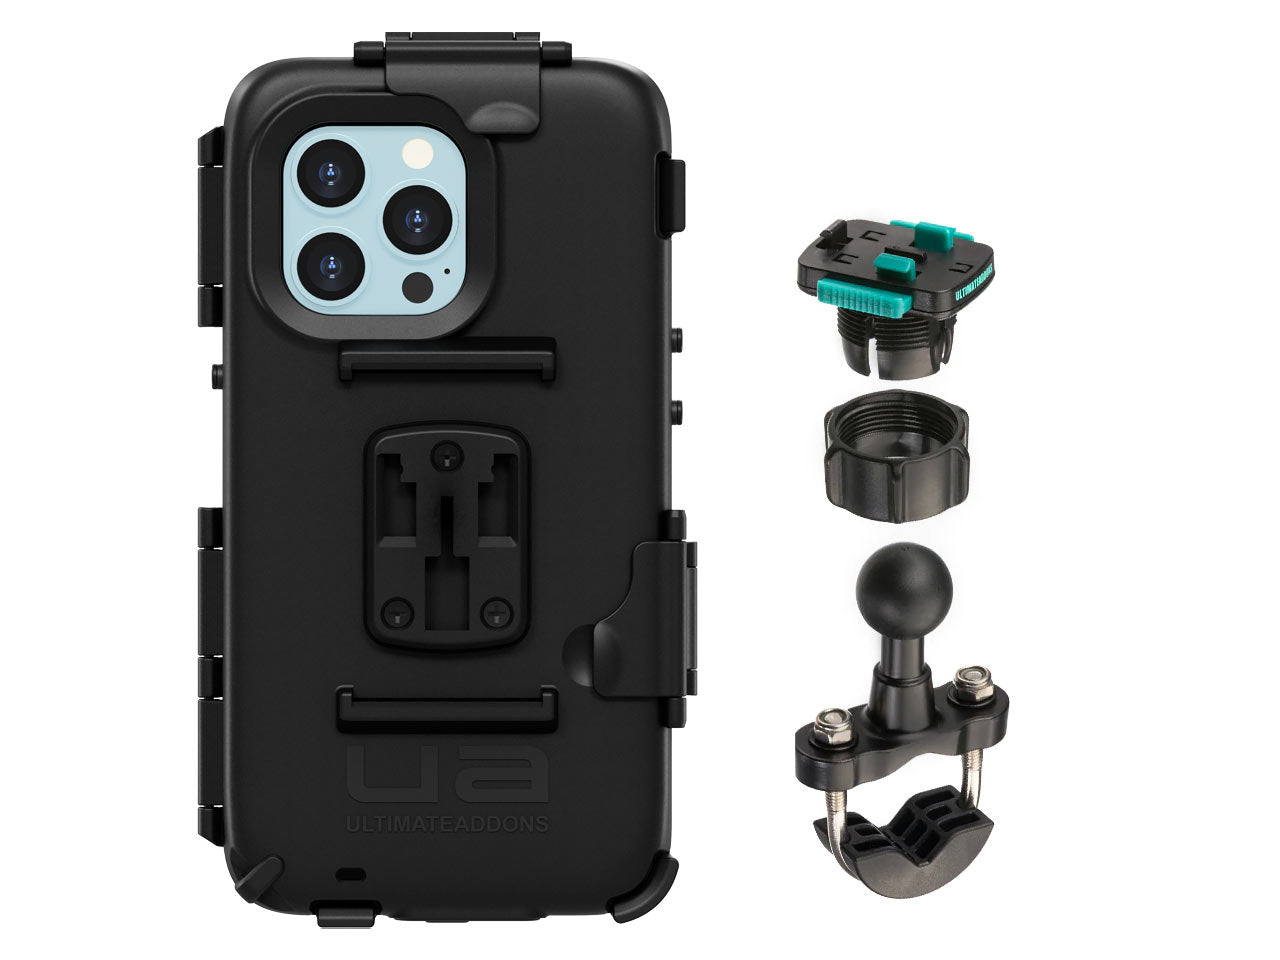 Ultimateaddons iPhone 14 Tough Waterproof Motorcycle Case Mount Kits